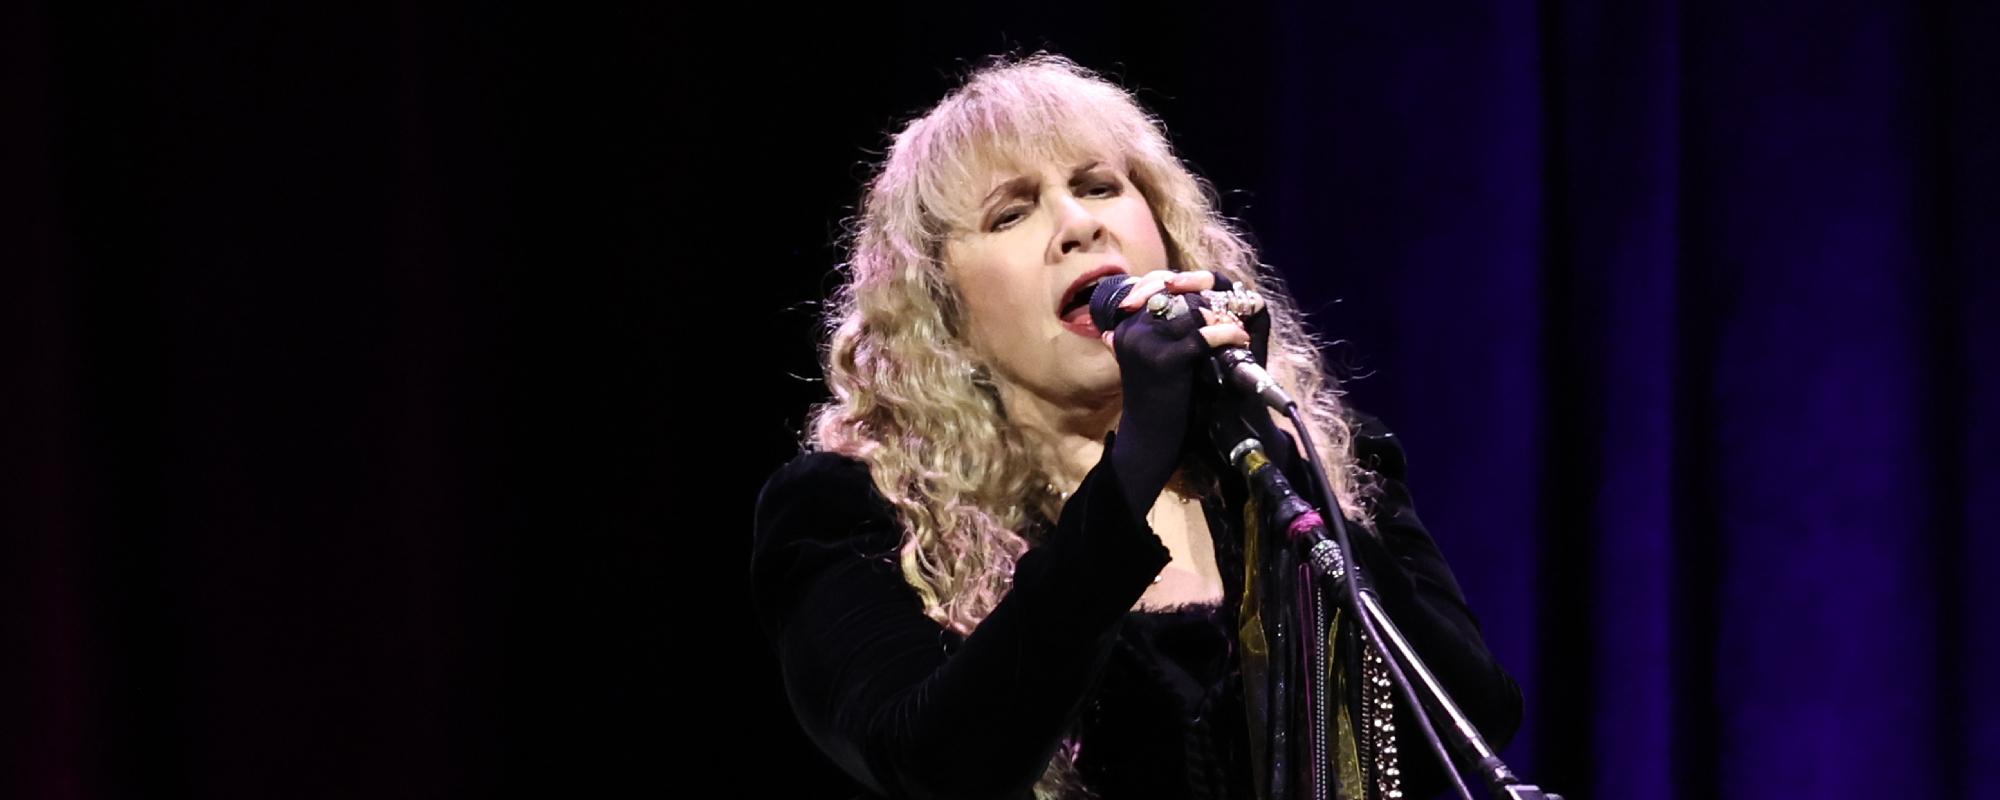 Stevie Nicks Scheduled To Headline BST Hyde Park, Calls It “A Dream Come True”